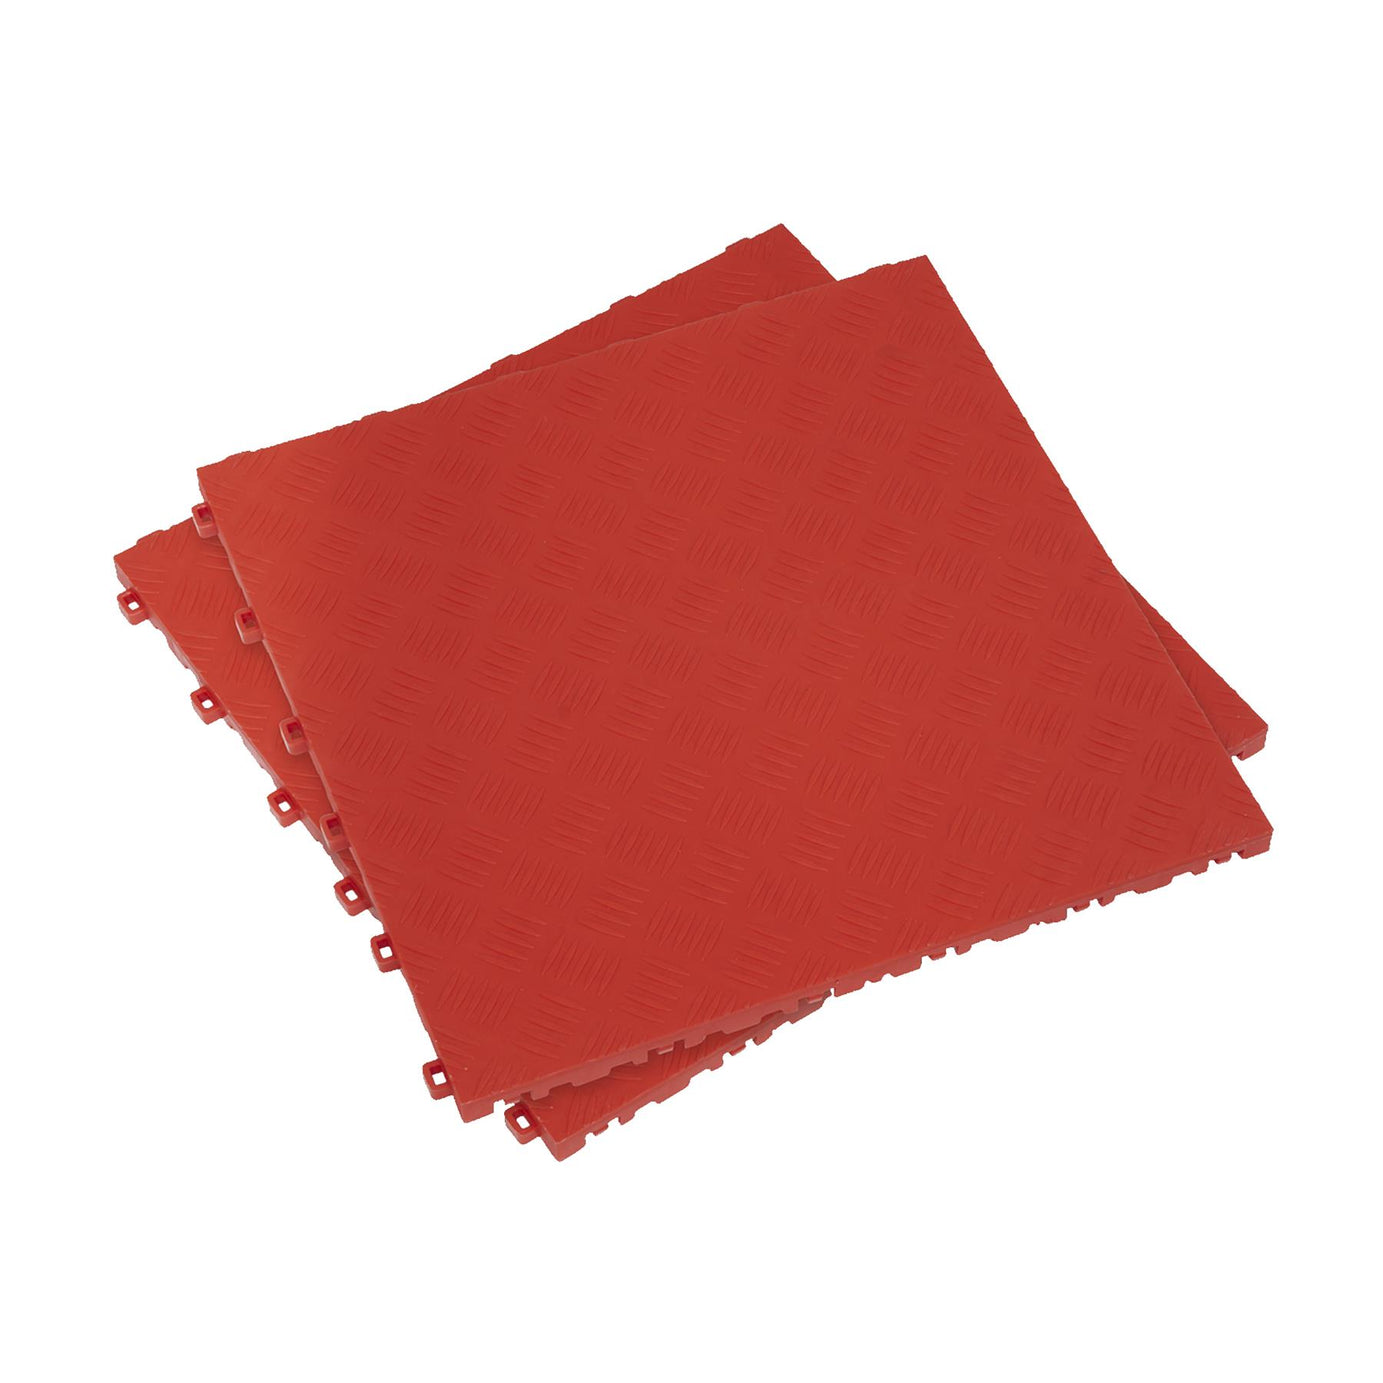 Sealey Polypropylene Floor Tile-Red Treadplate 400x400mm Pack of 9